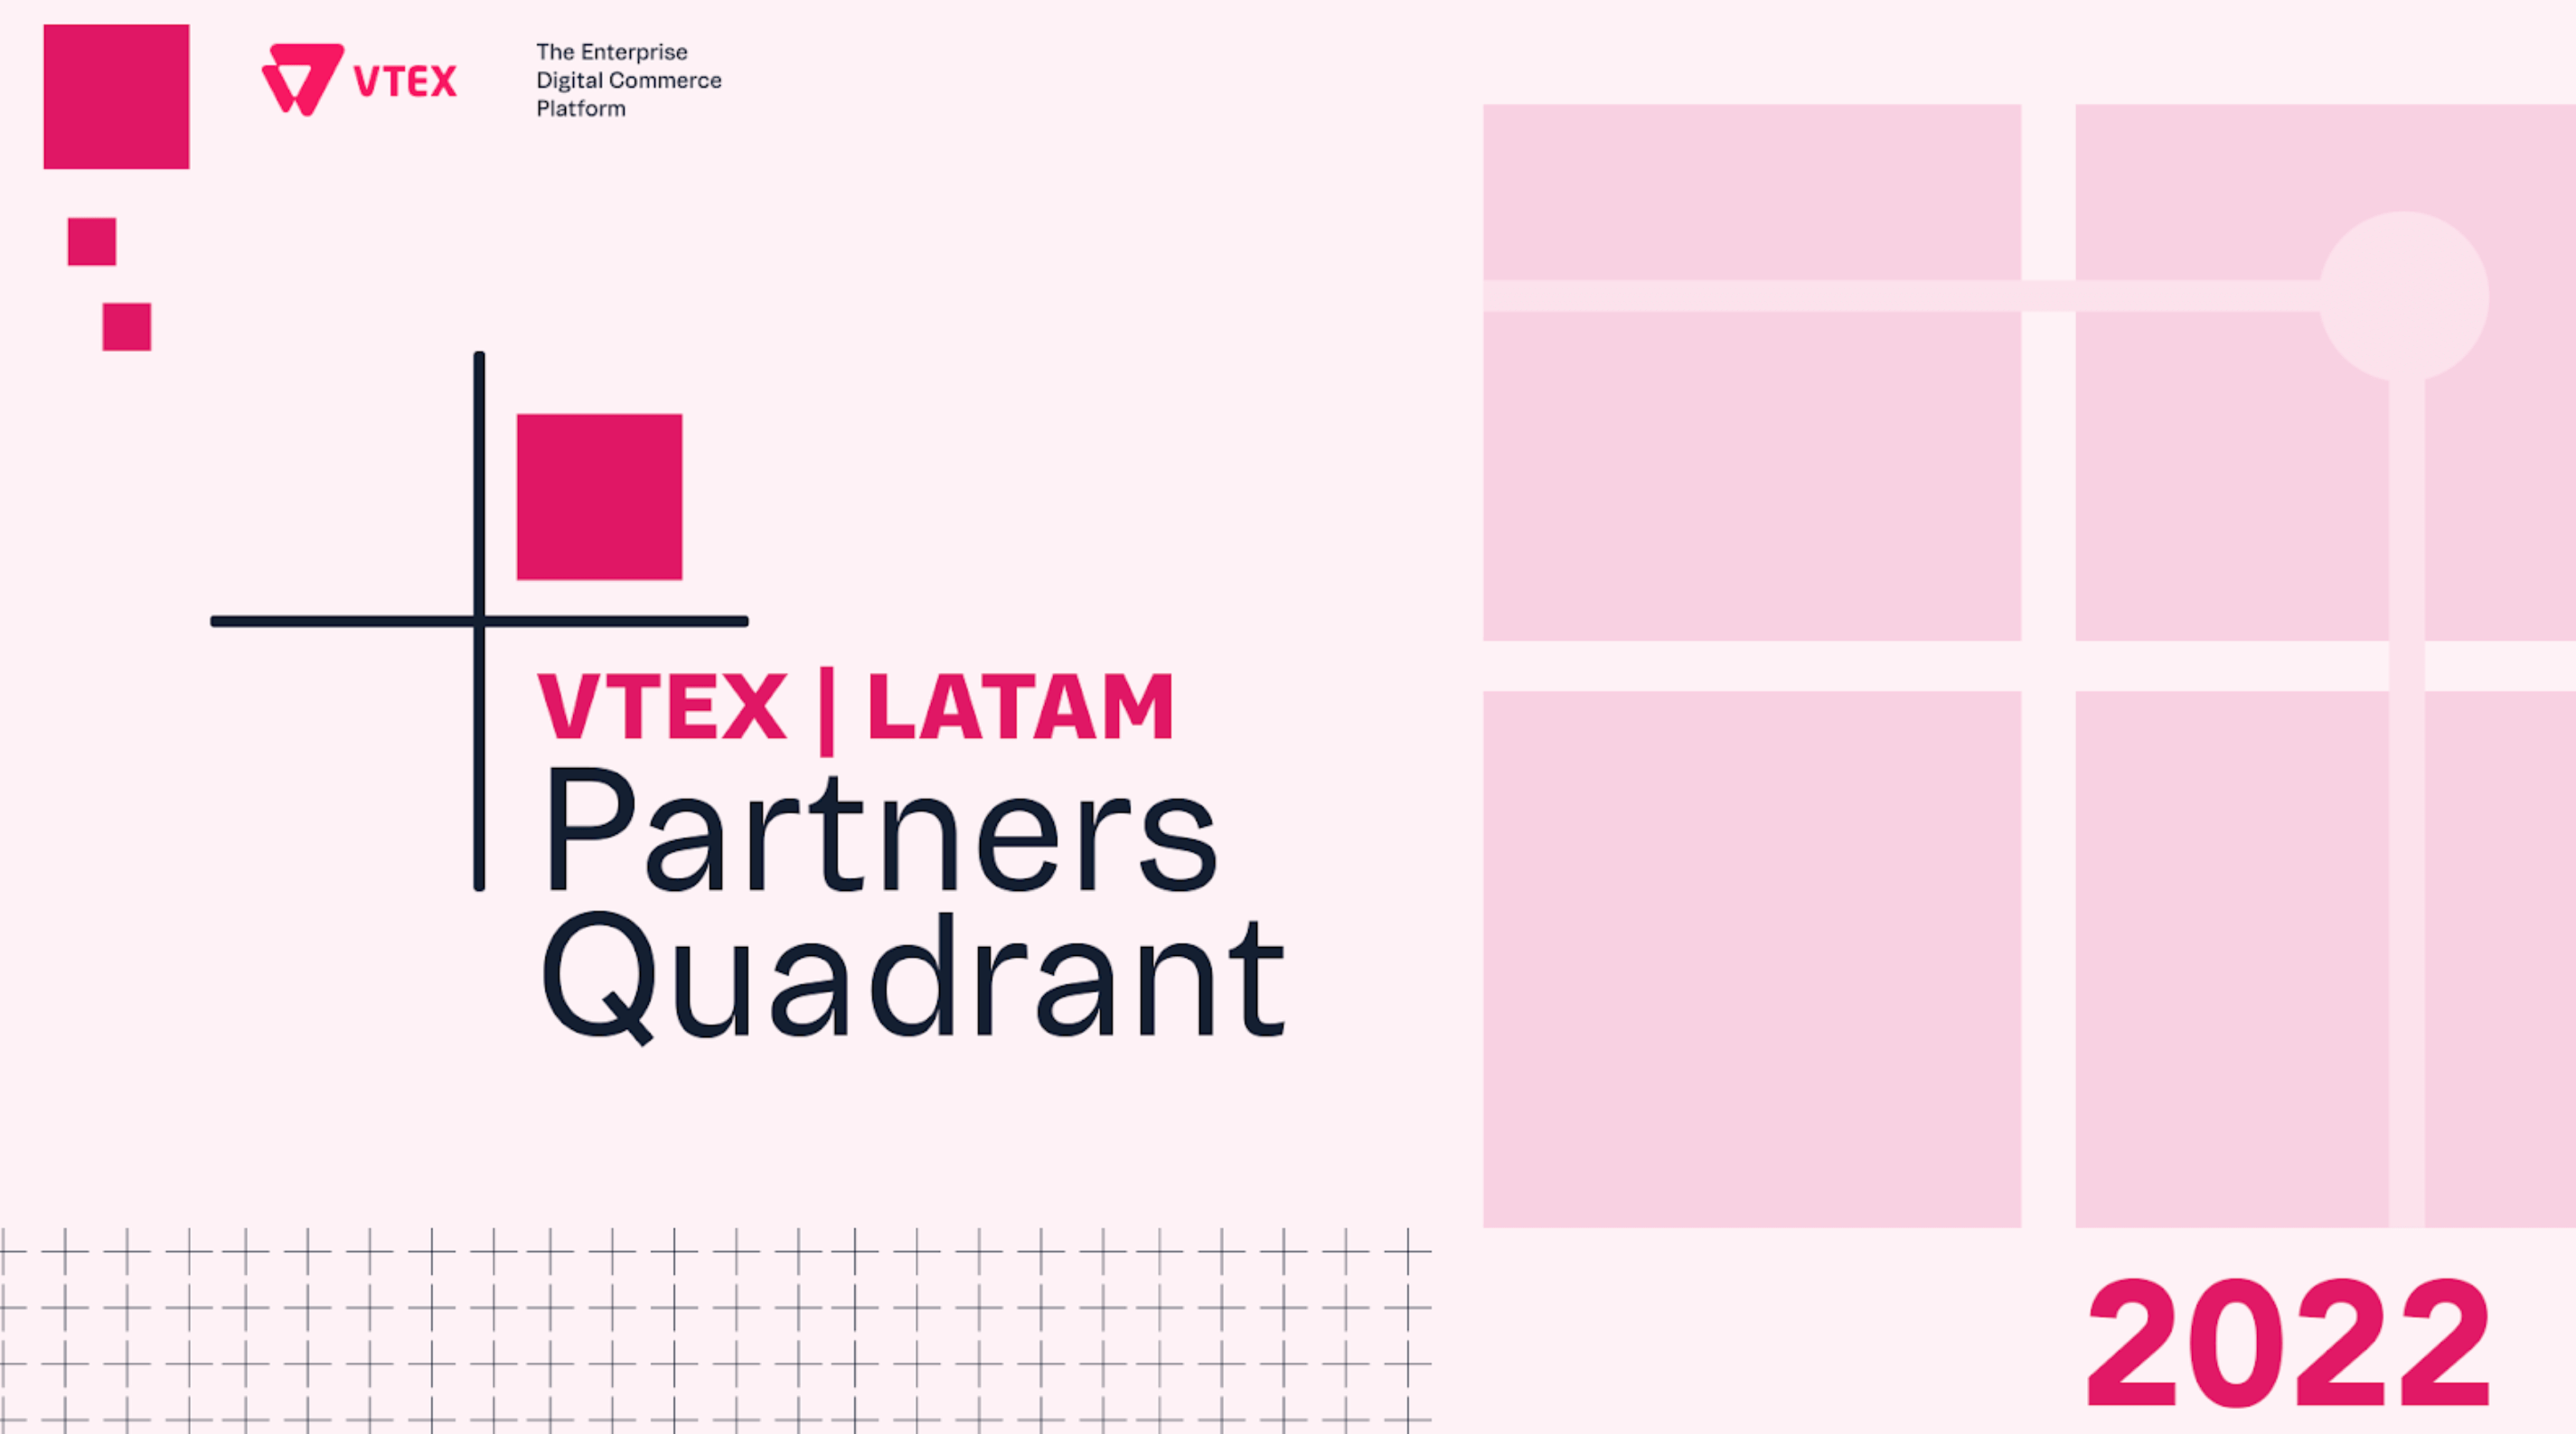 Cuadrante Partners VTEX LATAM 2022